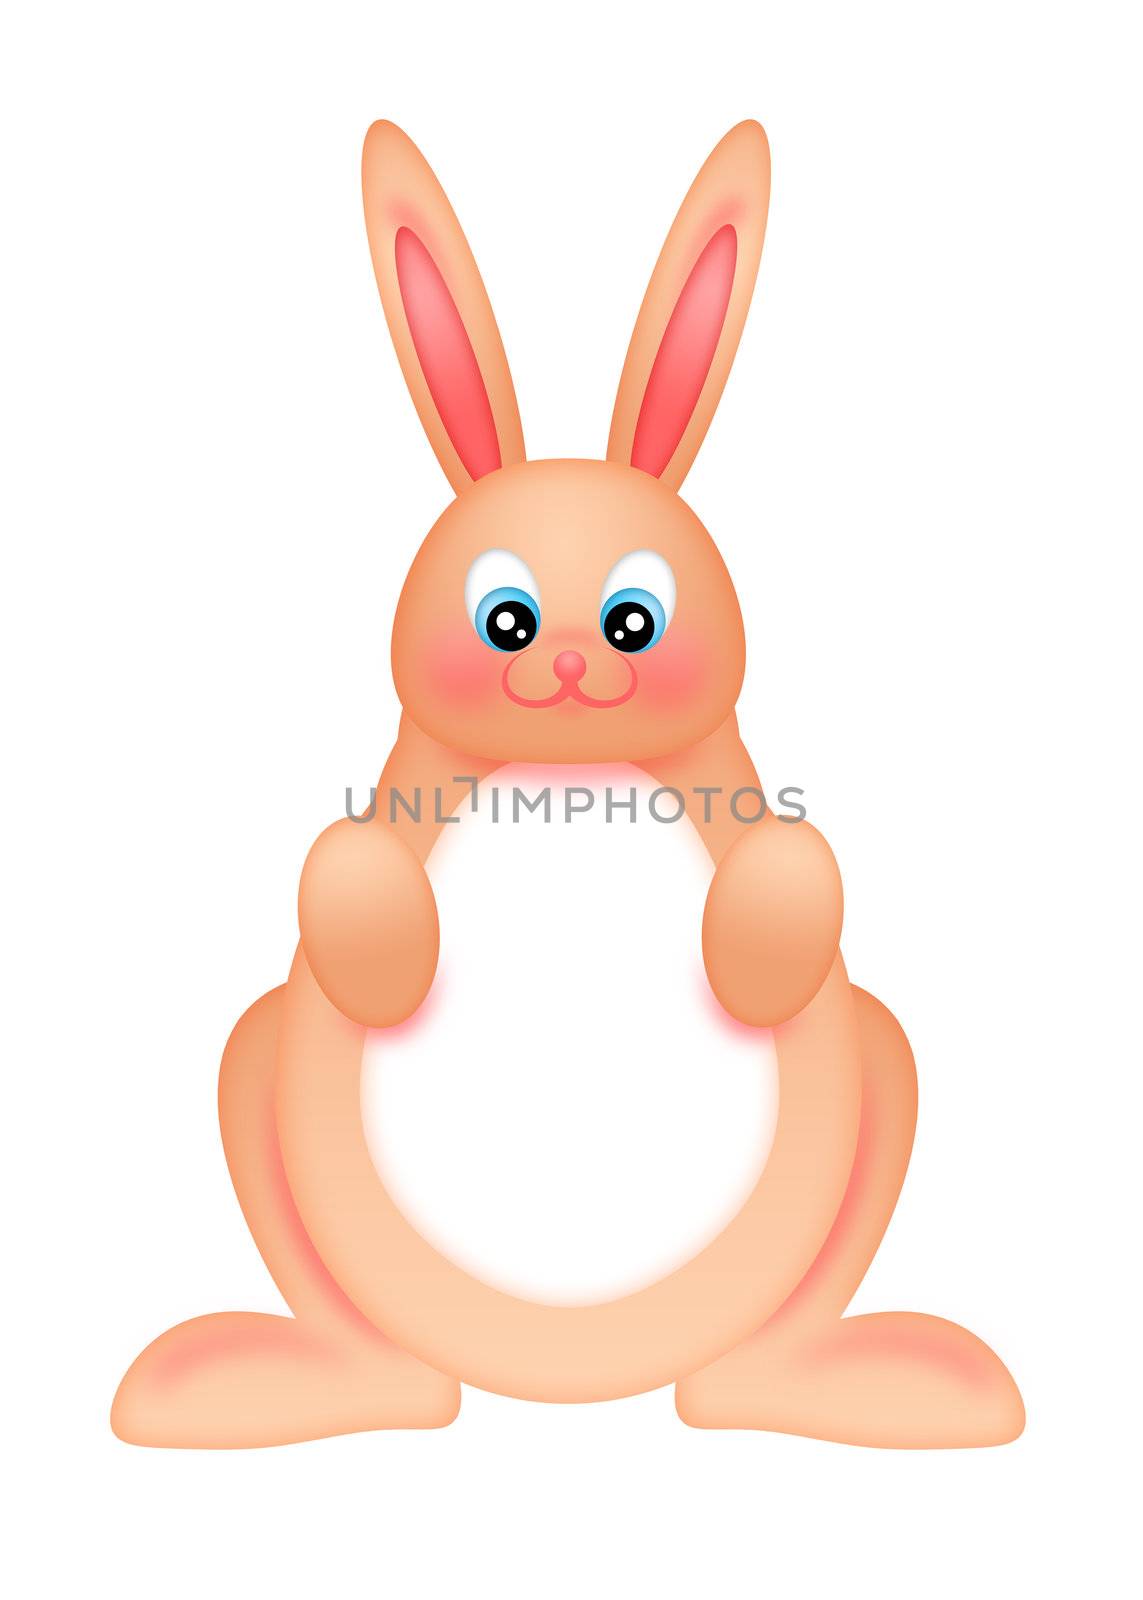 Happy Easter Bunny Rabbit Illustration Isolated on White Background